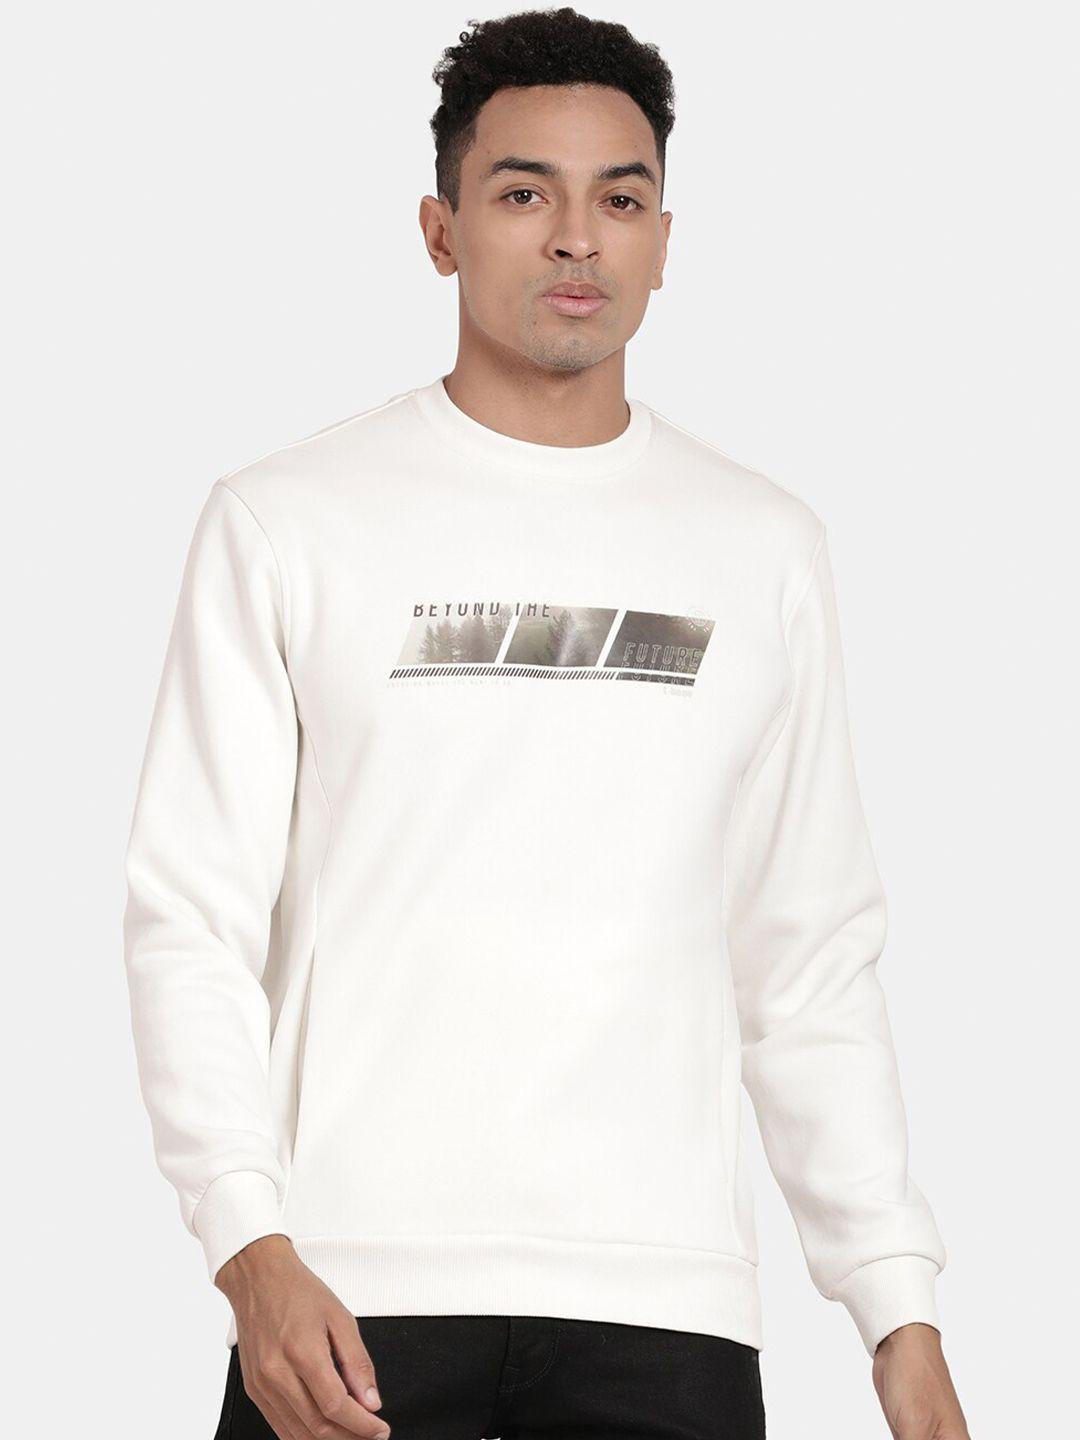 t-base graphic printed long sleeves pullover sweatshirt